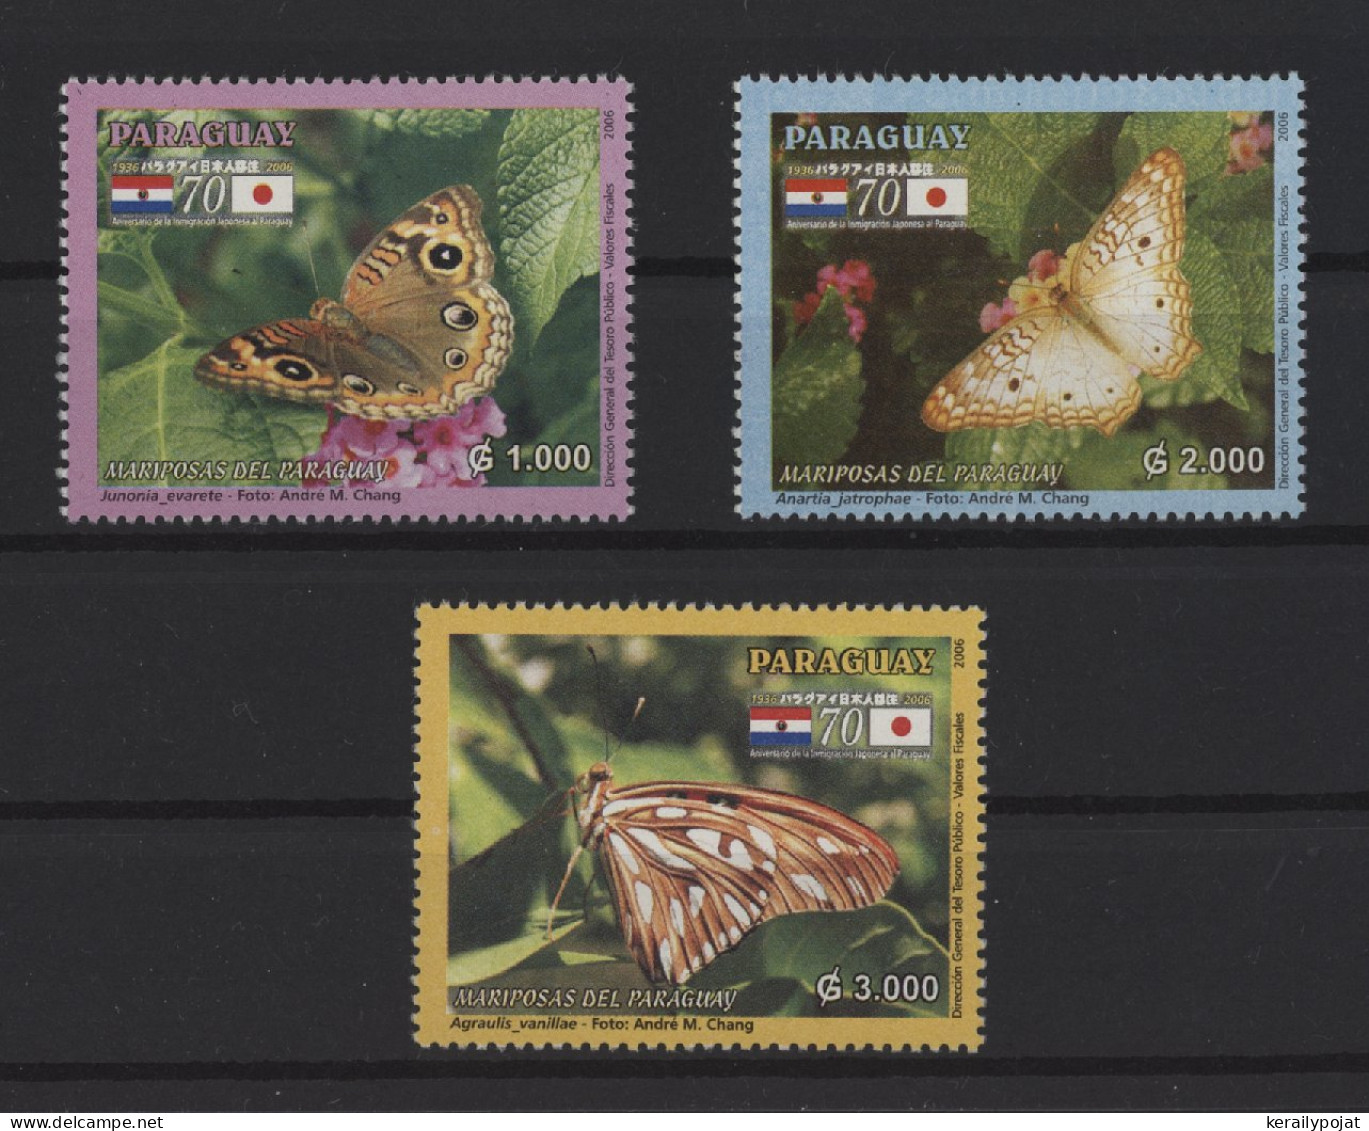 Paraguay - 2006 Butterflies MNH__(TH-26946) - Paraguay